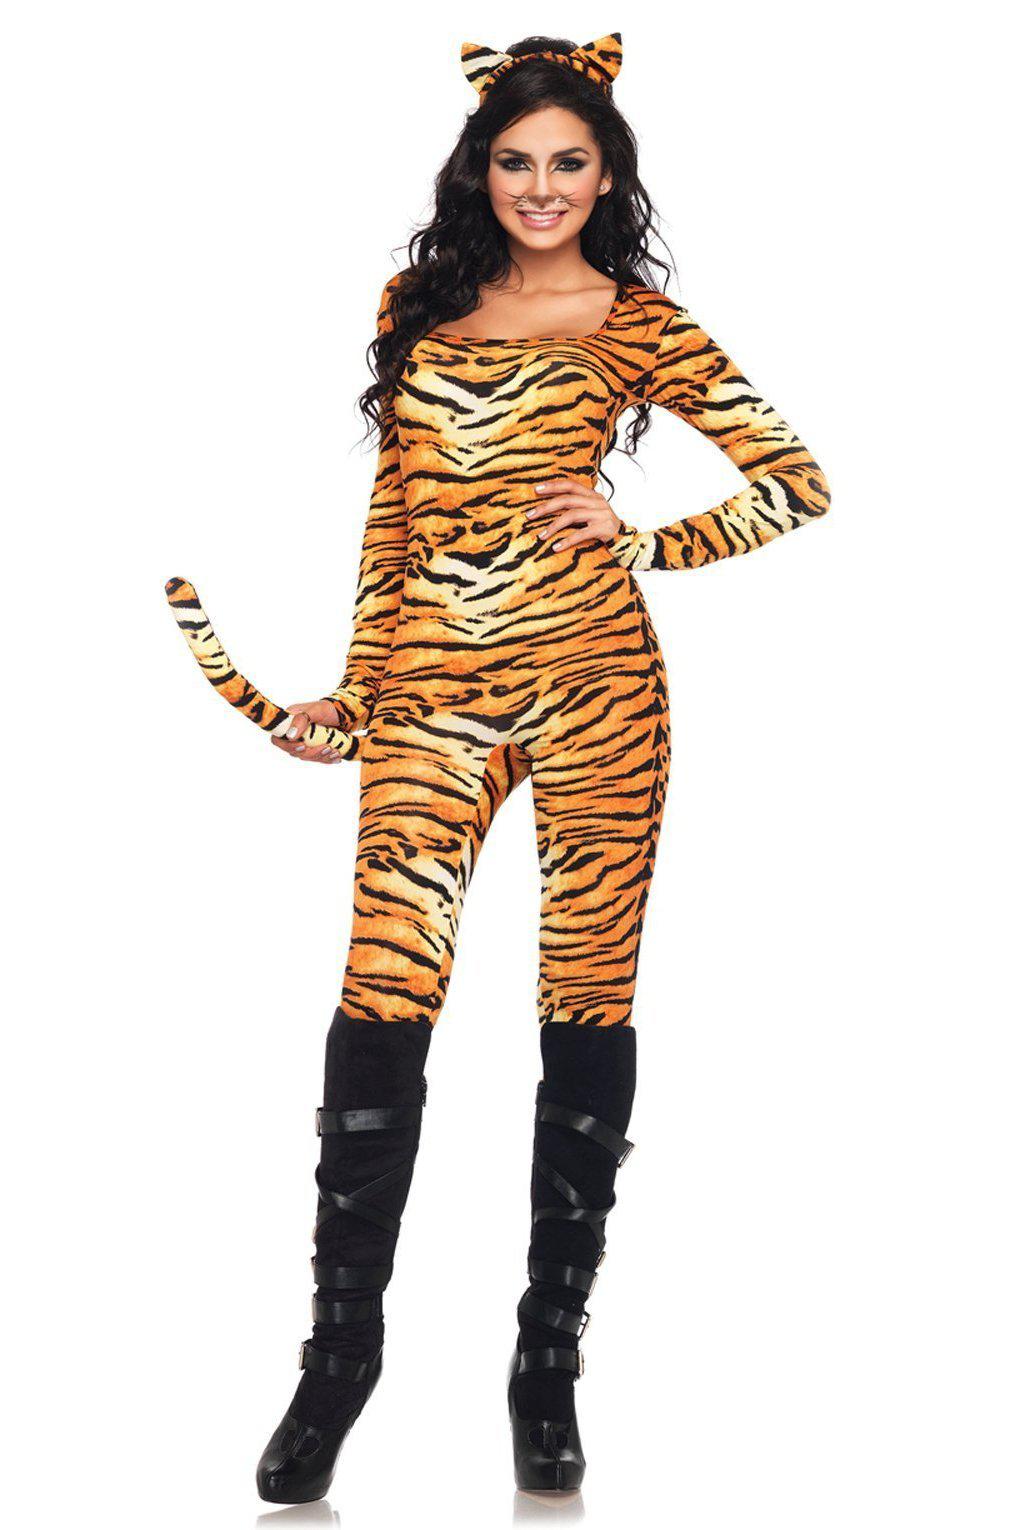 Wild Tigress Catsuit-Animal Costumes-Leg Avenue-SEXYSHOES.COM